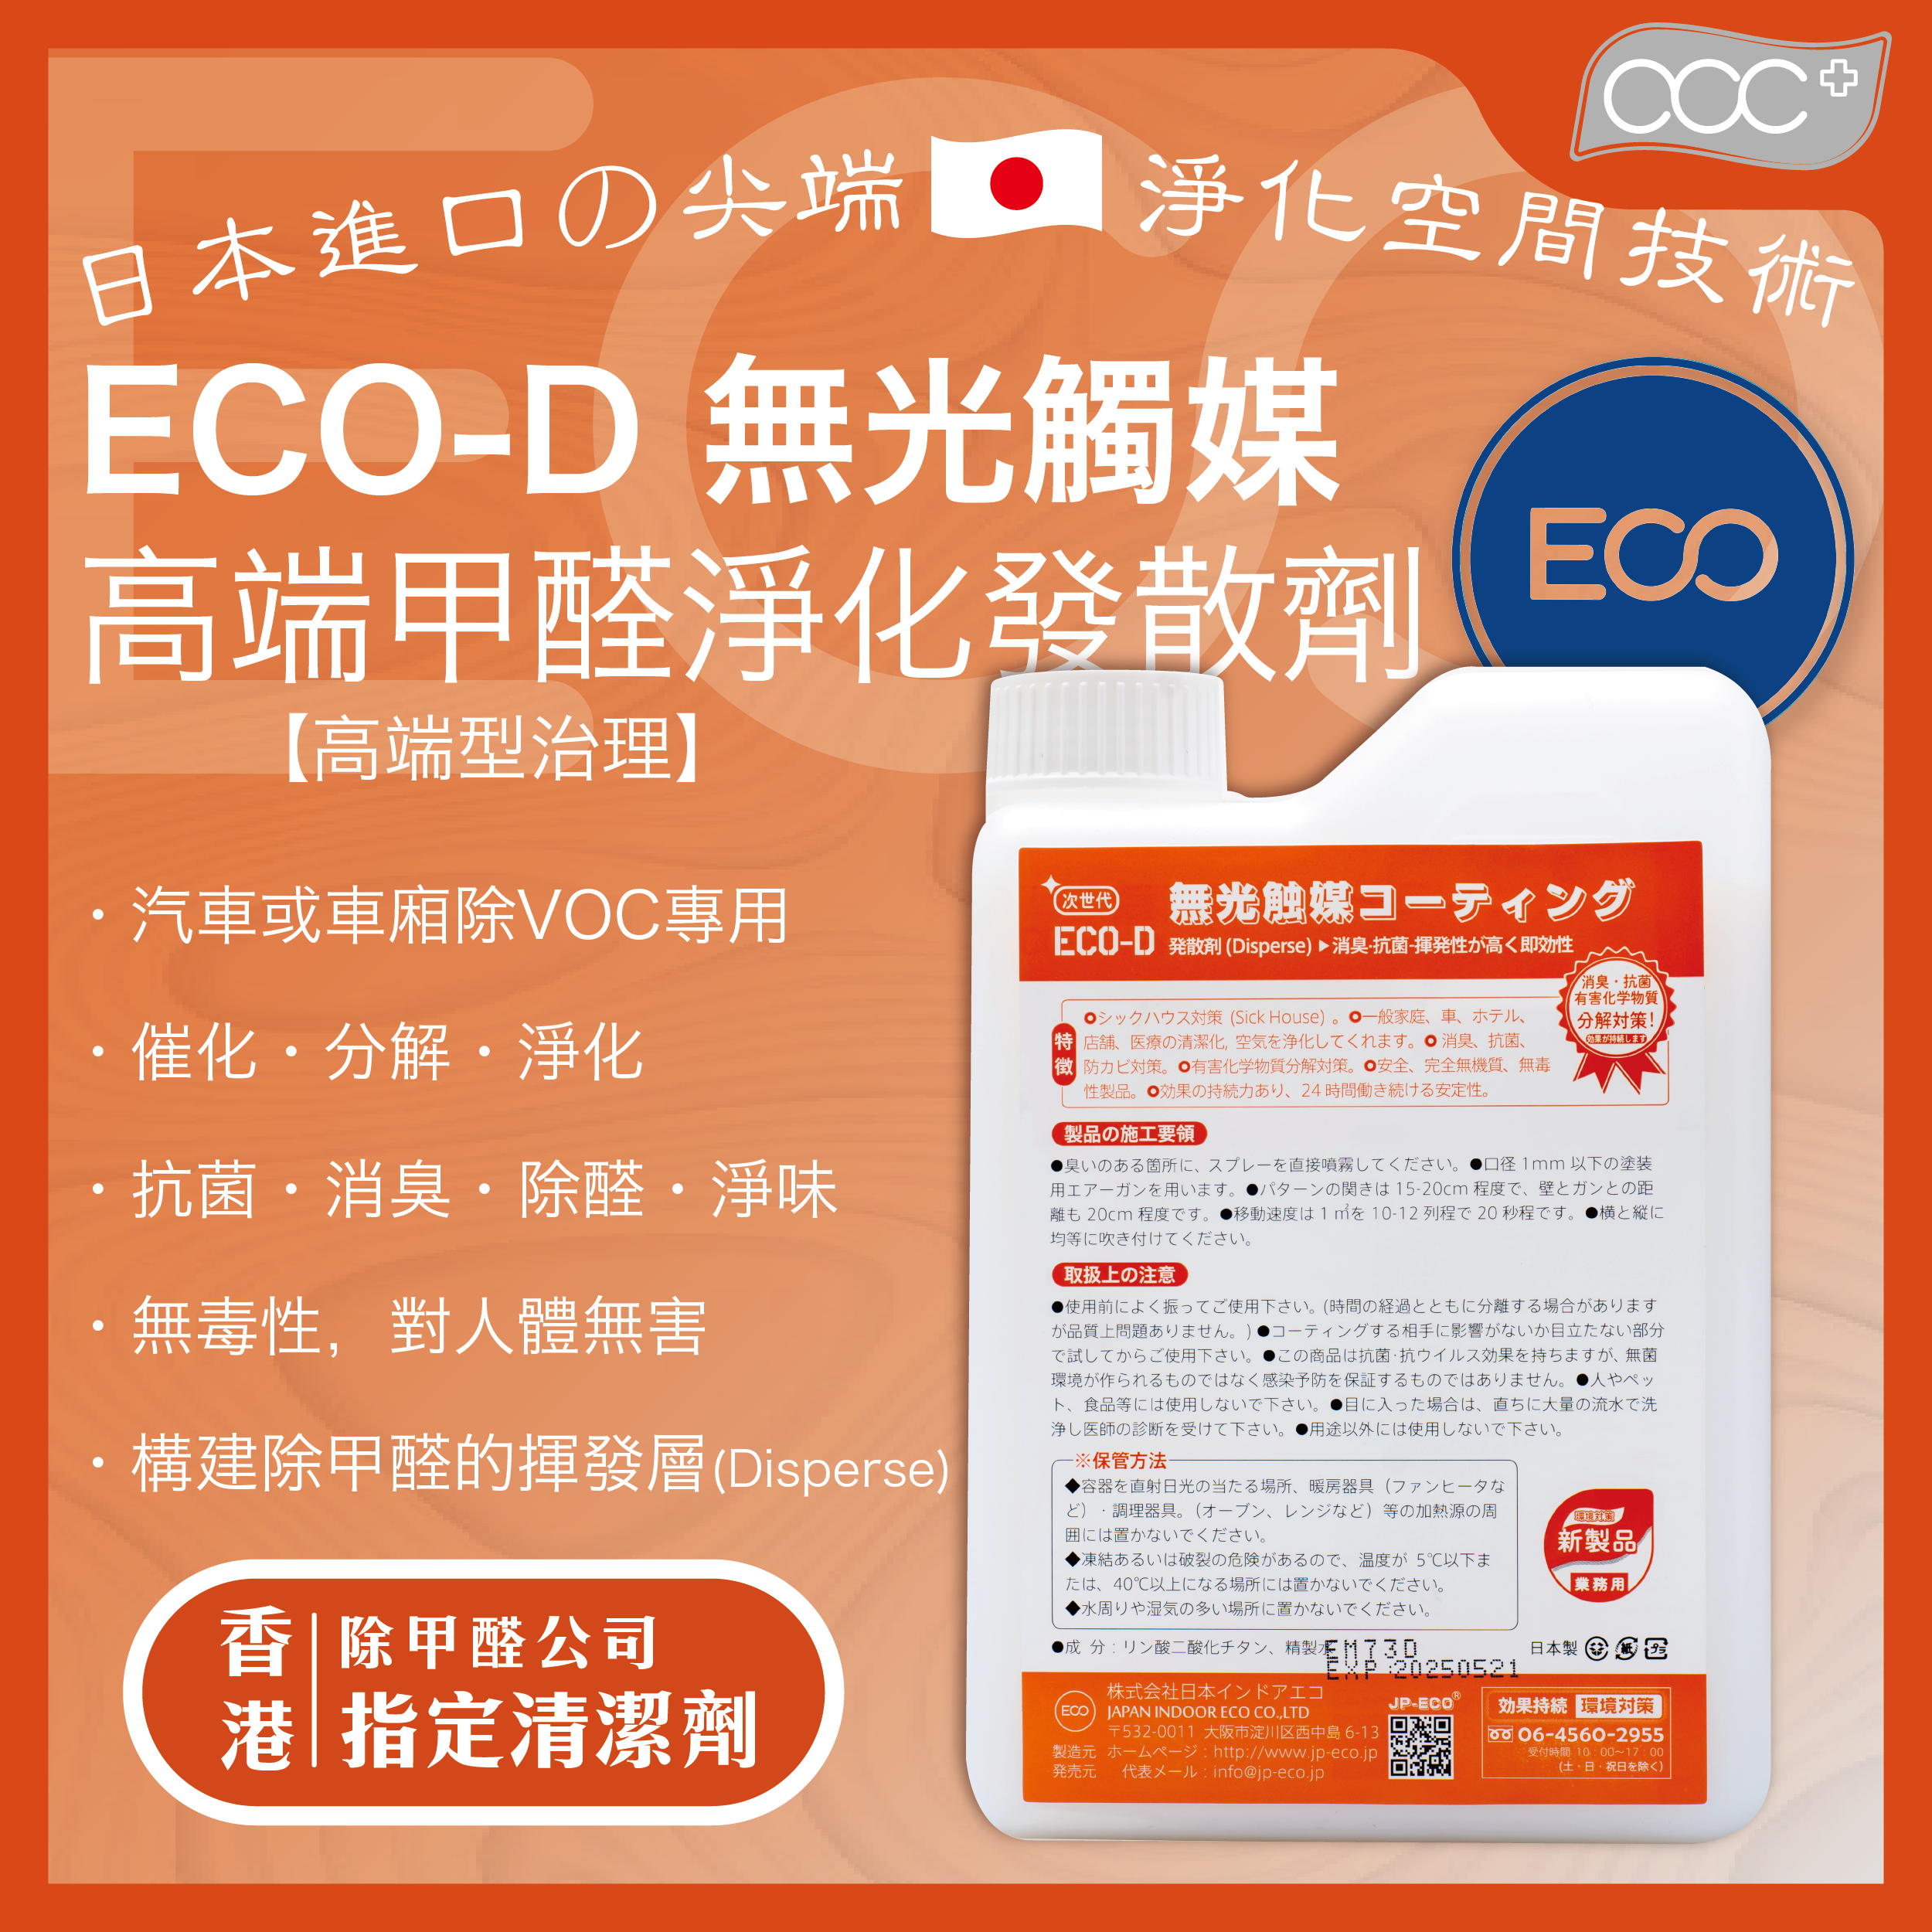 DASH JP-ECO【日本原裝】ECO-D 無光觸媒 發散劑 (1kg) 甲醛清除劑 強力型淨化噴霧劑